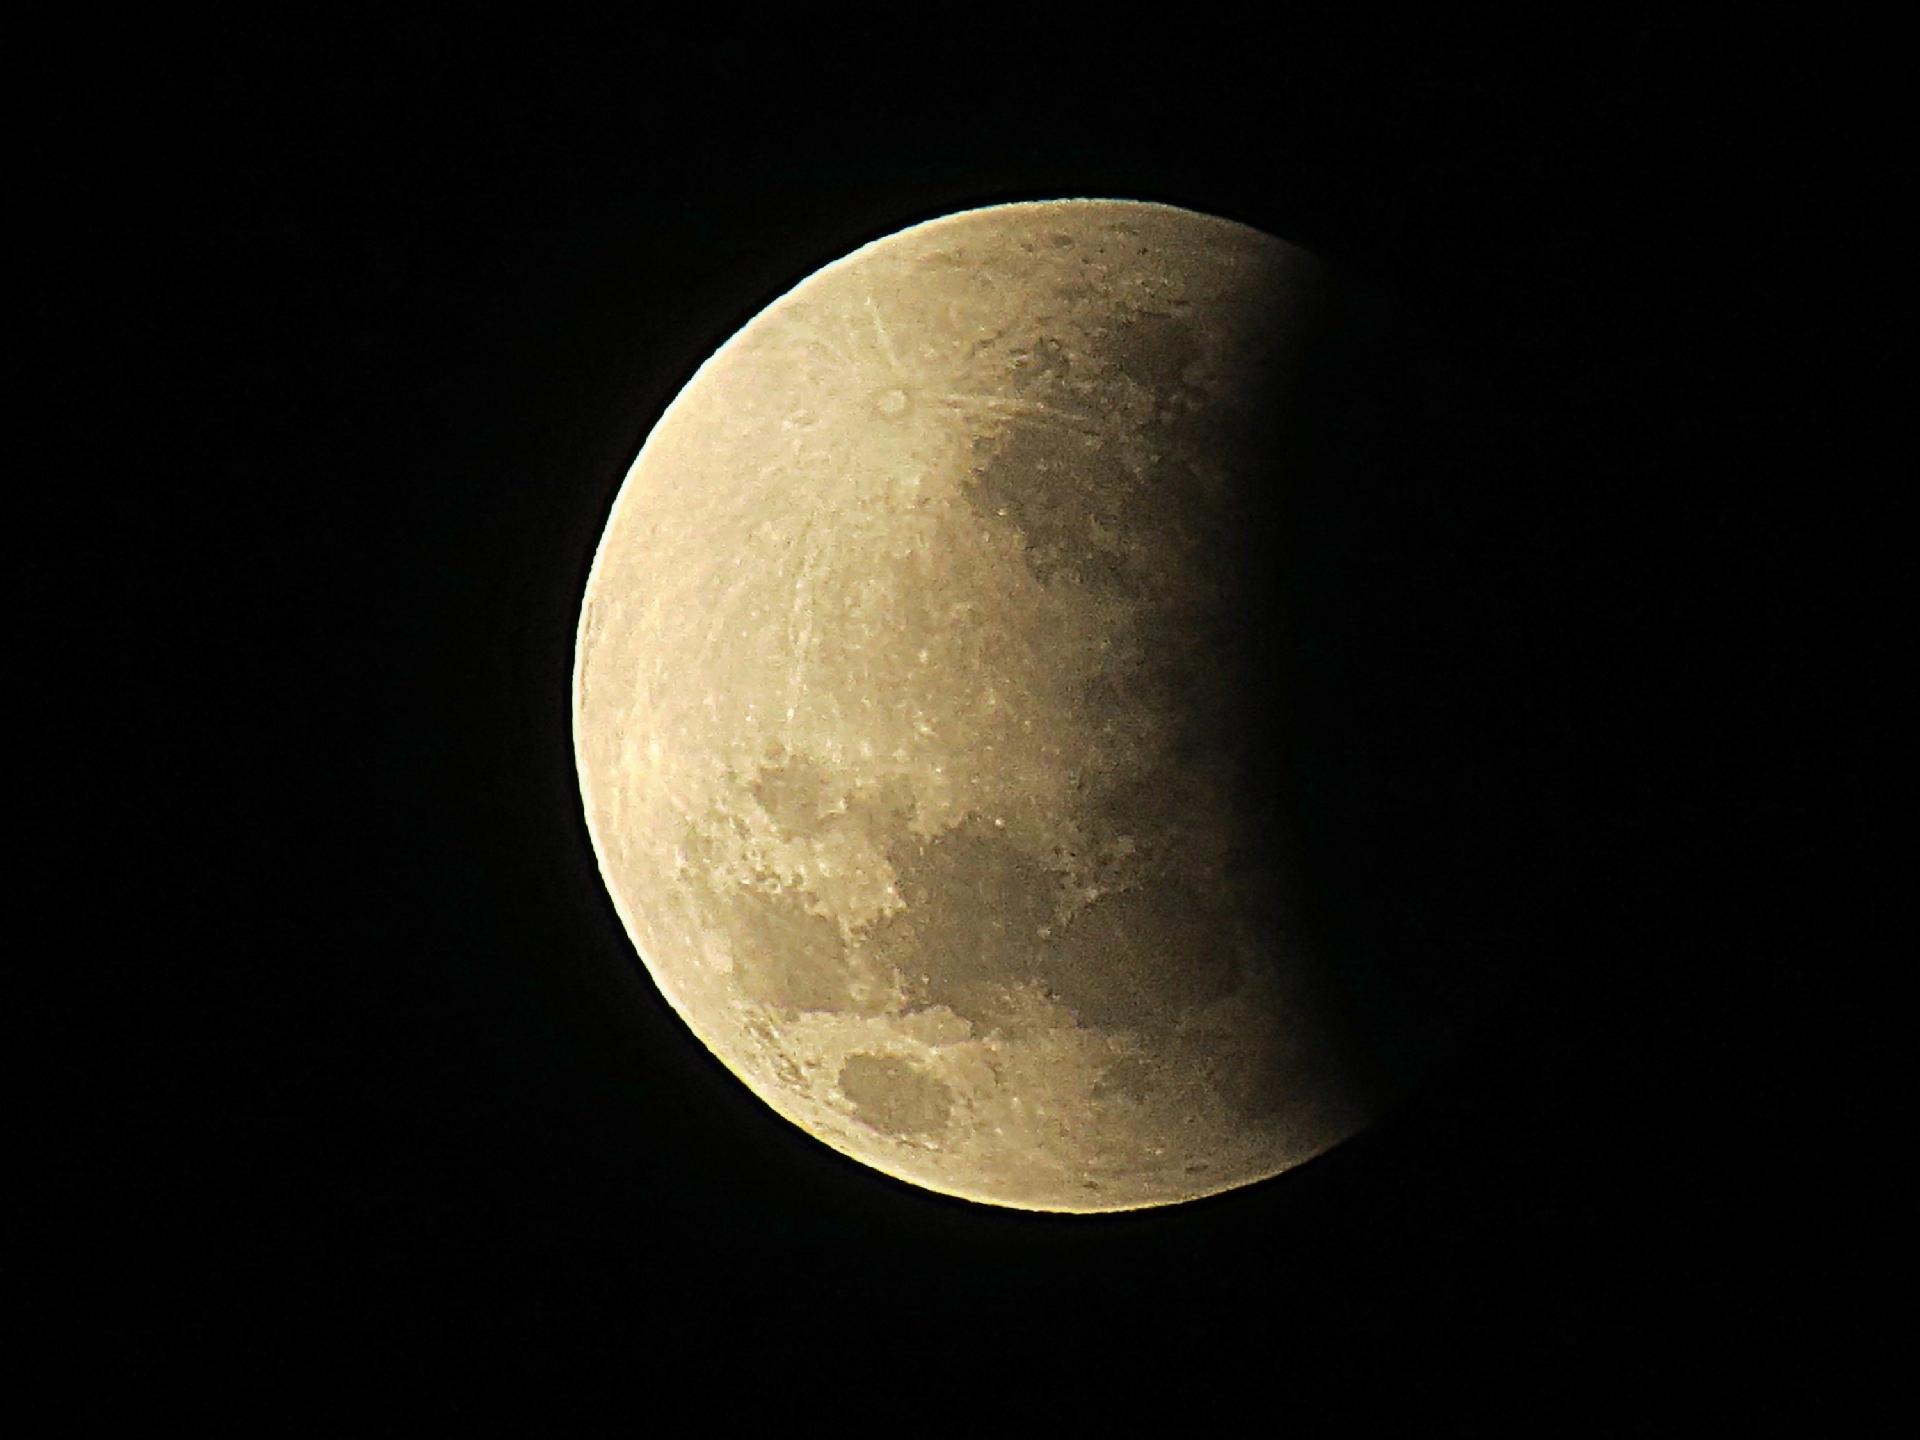 Imagen del eclipse capturada en Toledo (PR) - Gisele Pimenta / FramePhoto / Fulhapress